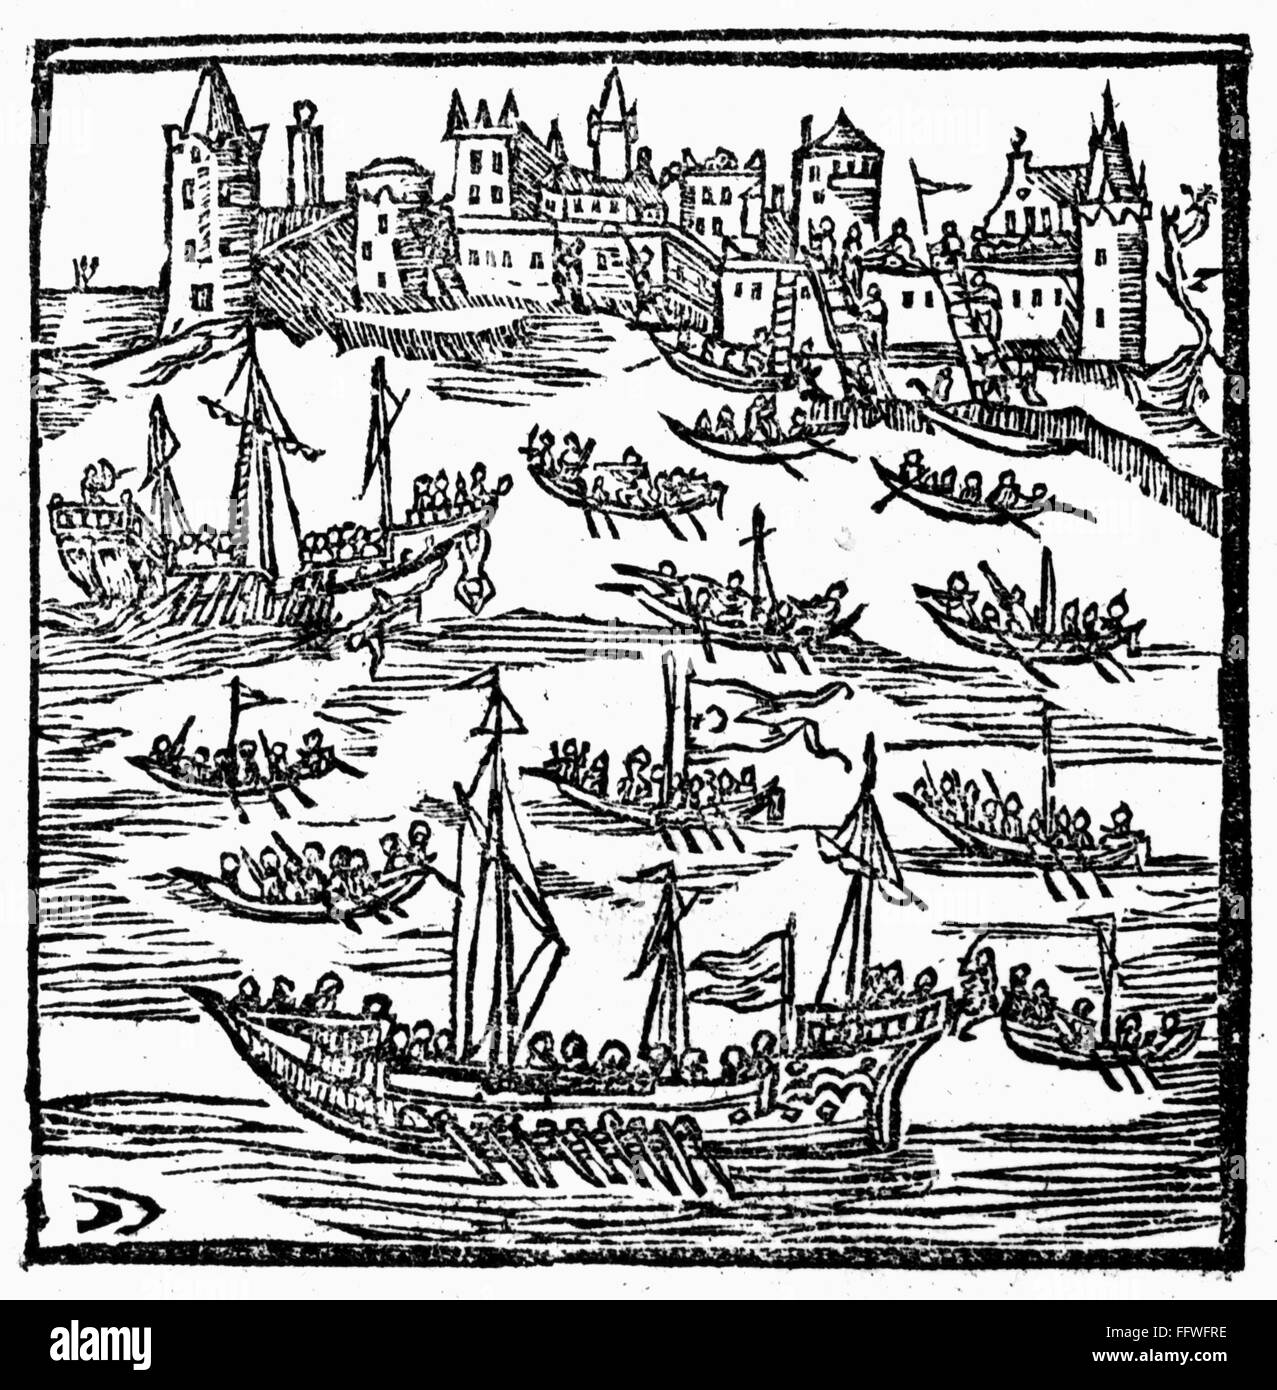 CRIMEA: COSSACK ATTACK. /nA cossack navy attacking the Crimea. Woodcut, early 17th century. Stock Photo